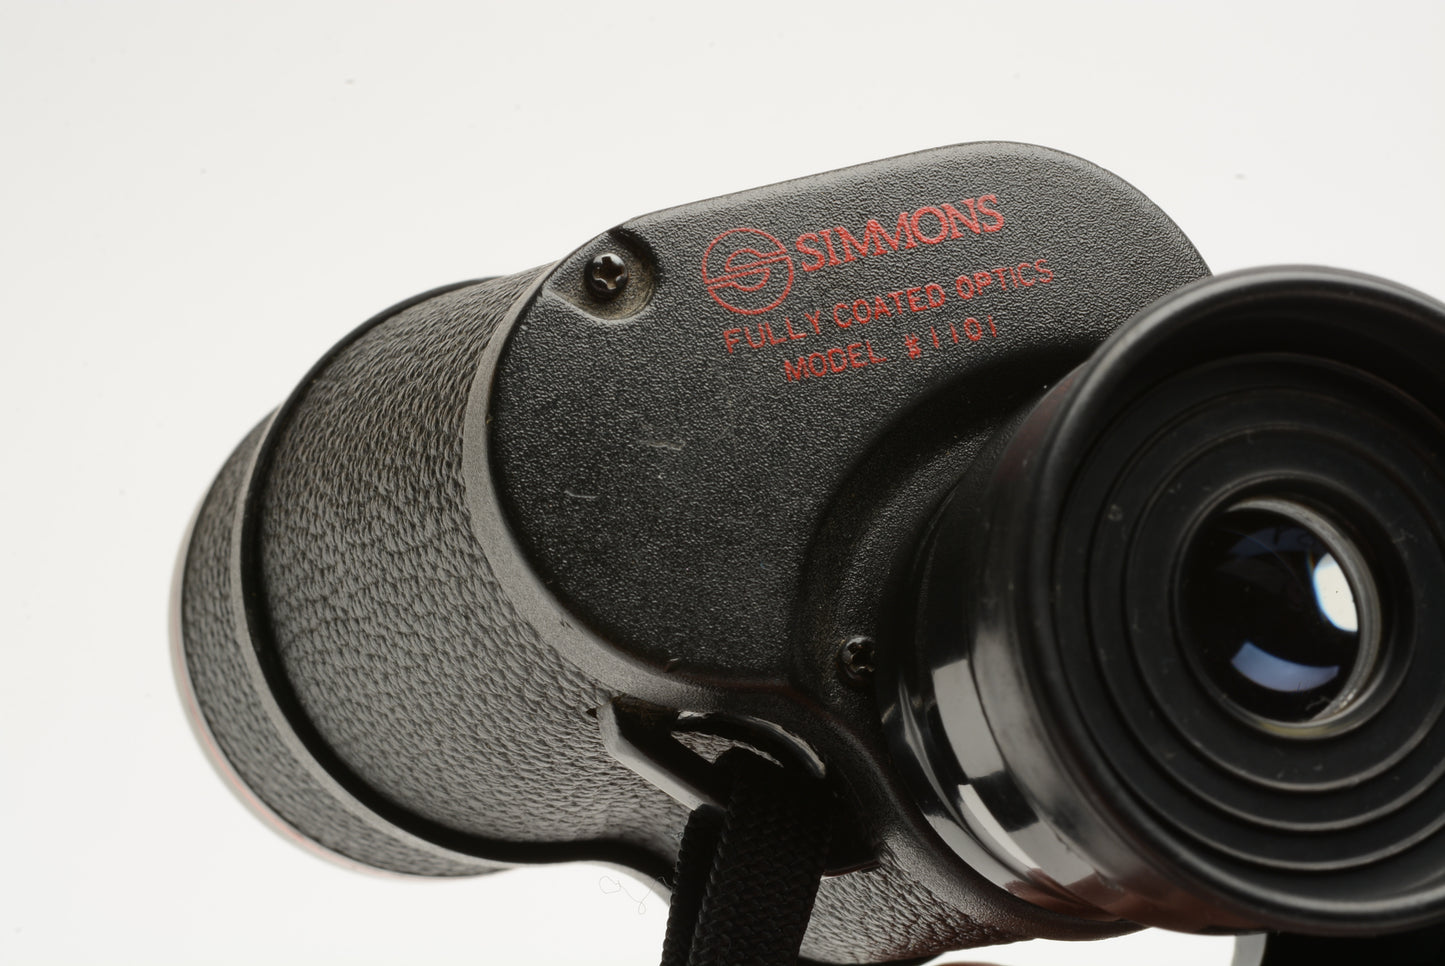 Simmons 7x35 Binoculars 420 feet at 1000 Yards